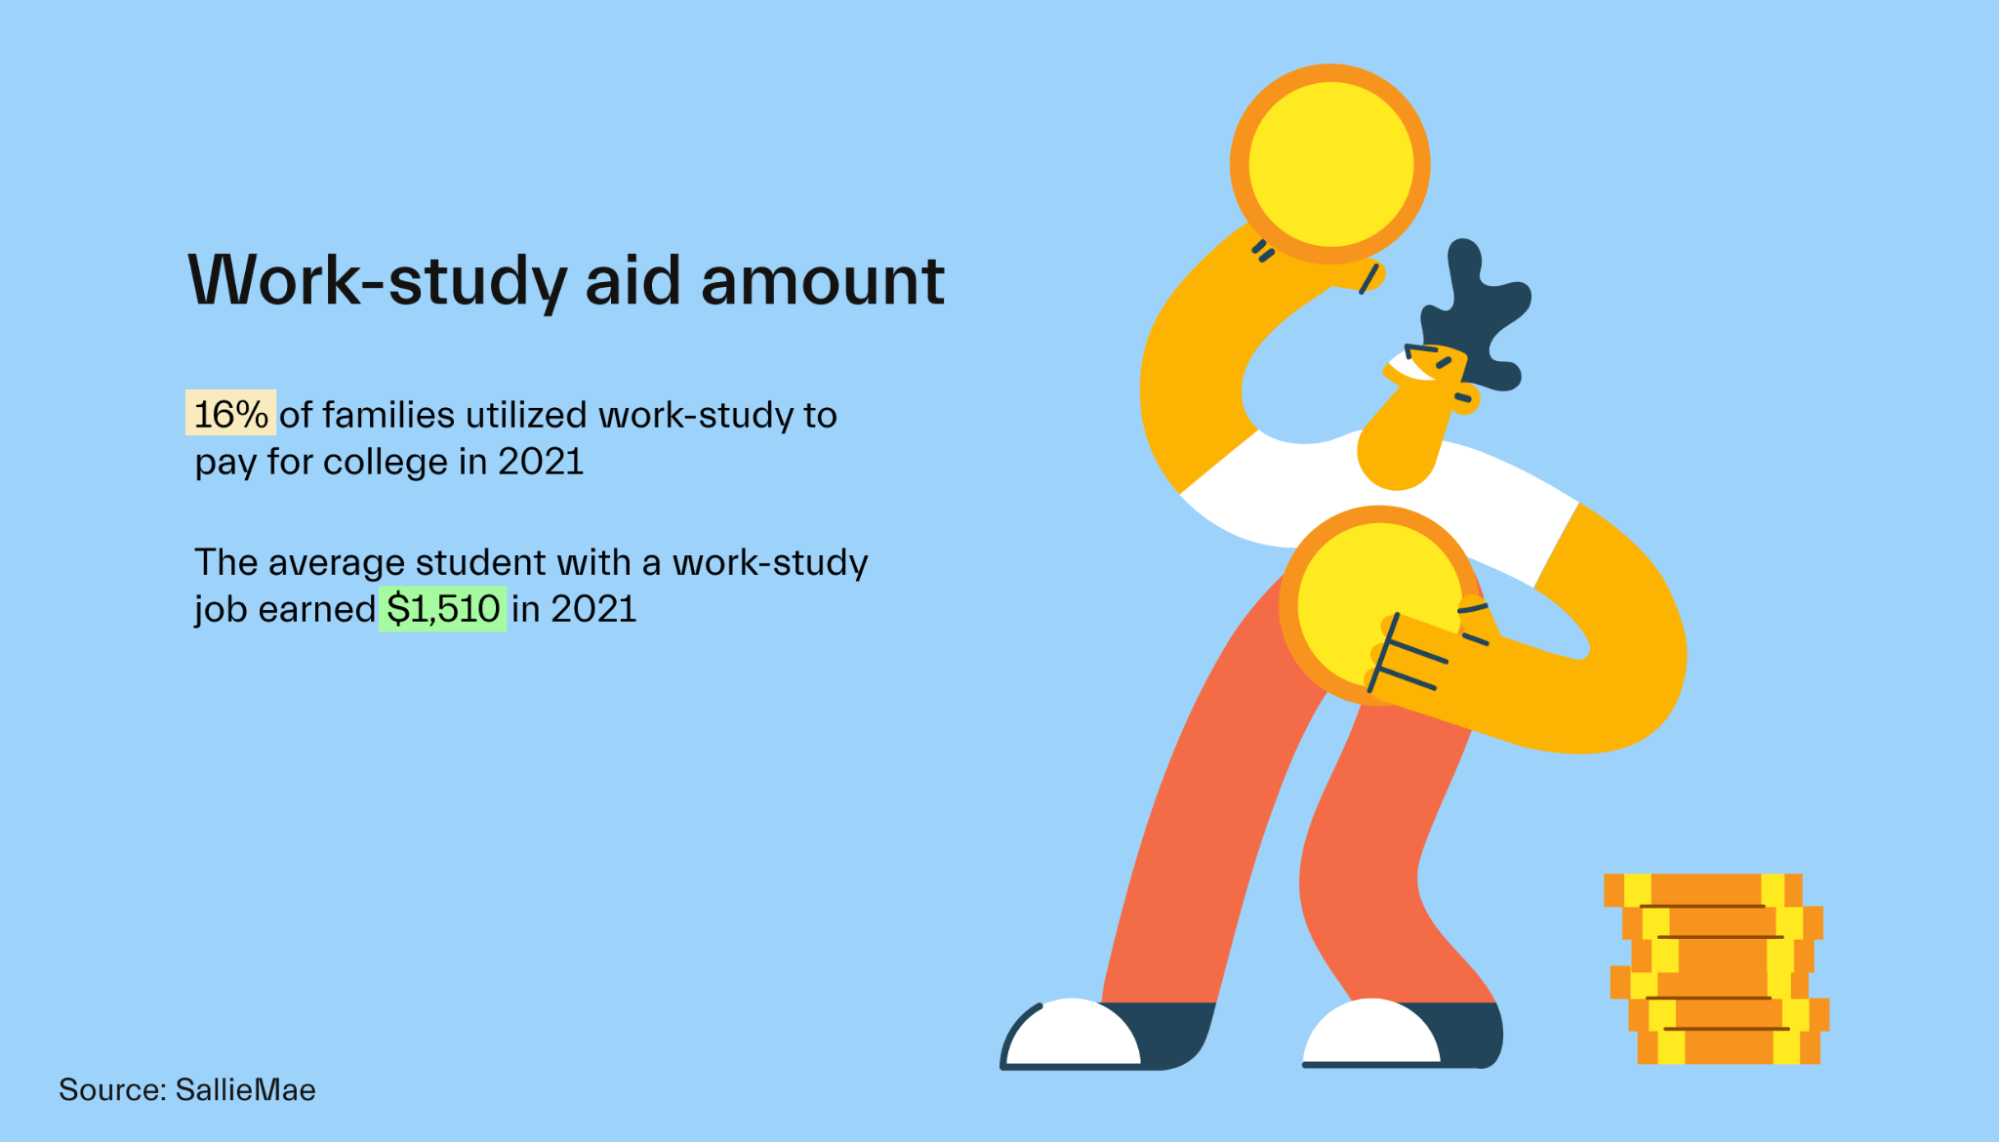 Work-study aid amount